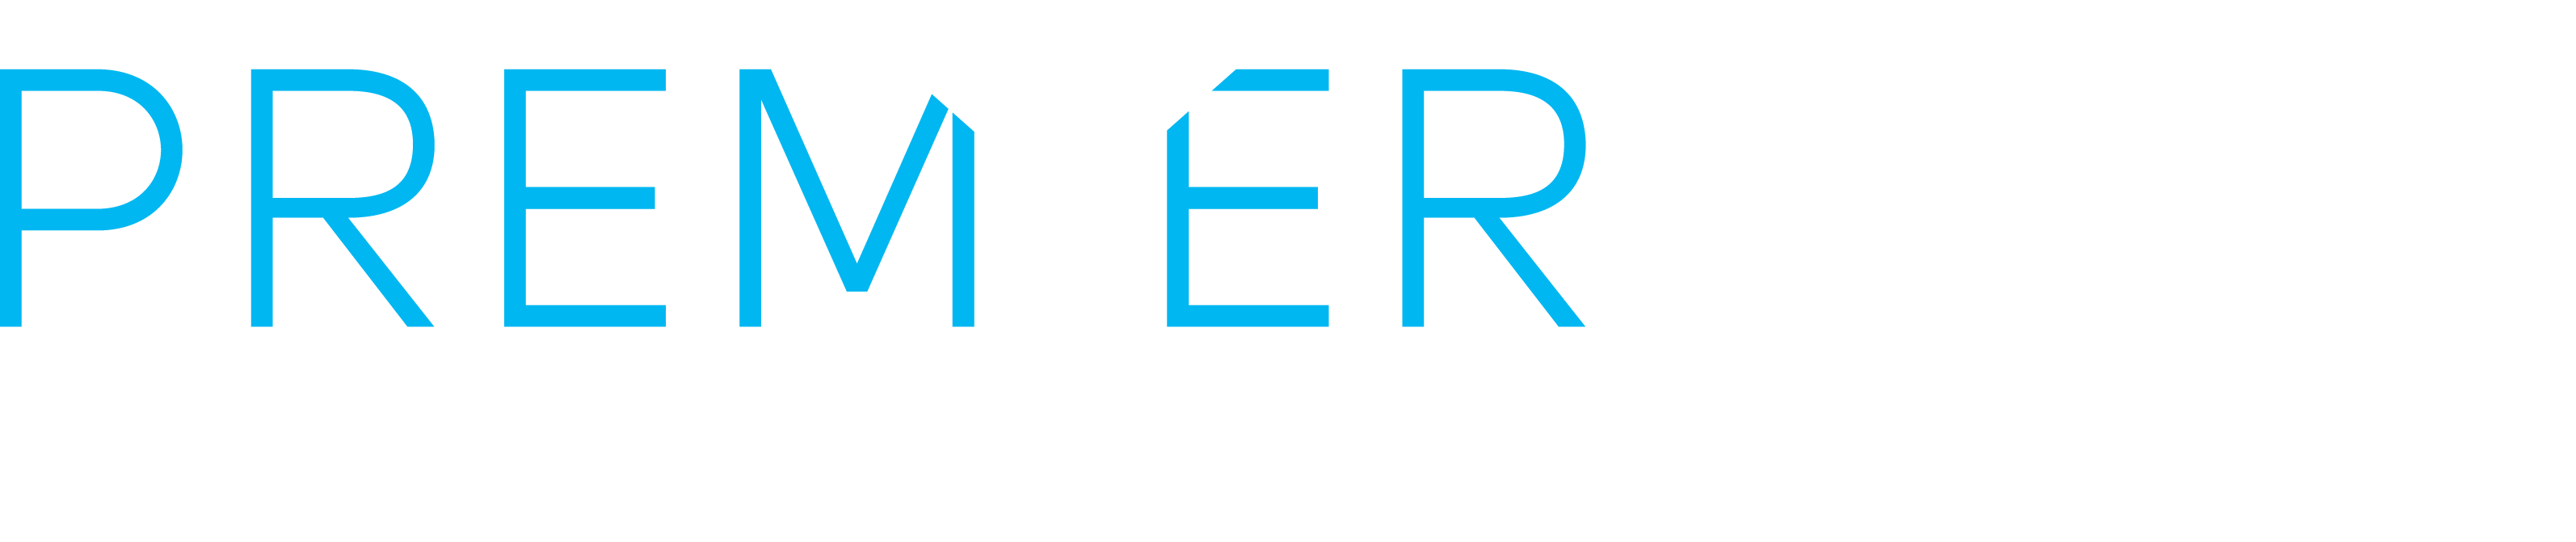 Premier Pour Bartender Logo